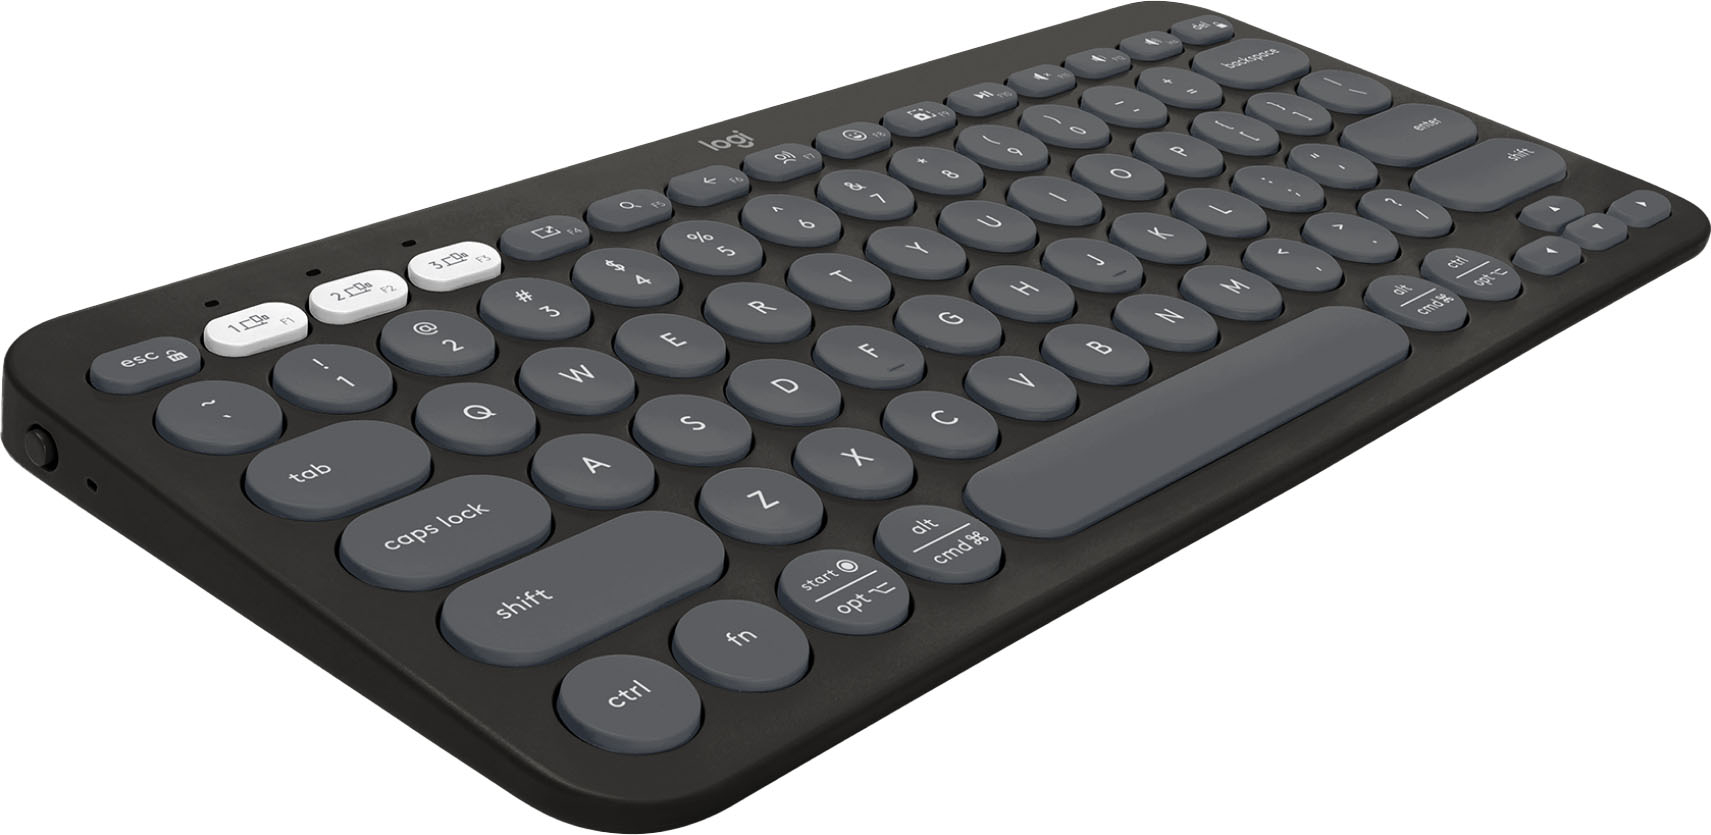 Logitech Wireless Desktop MK320 - keyboard and mouse set - 920